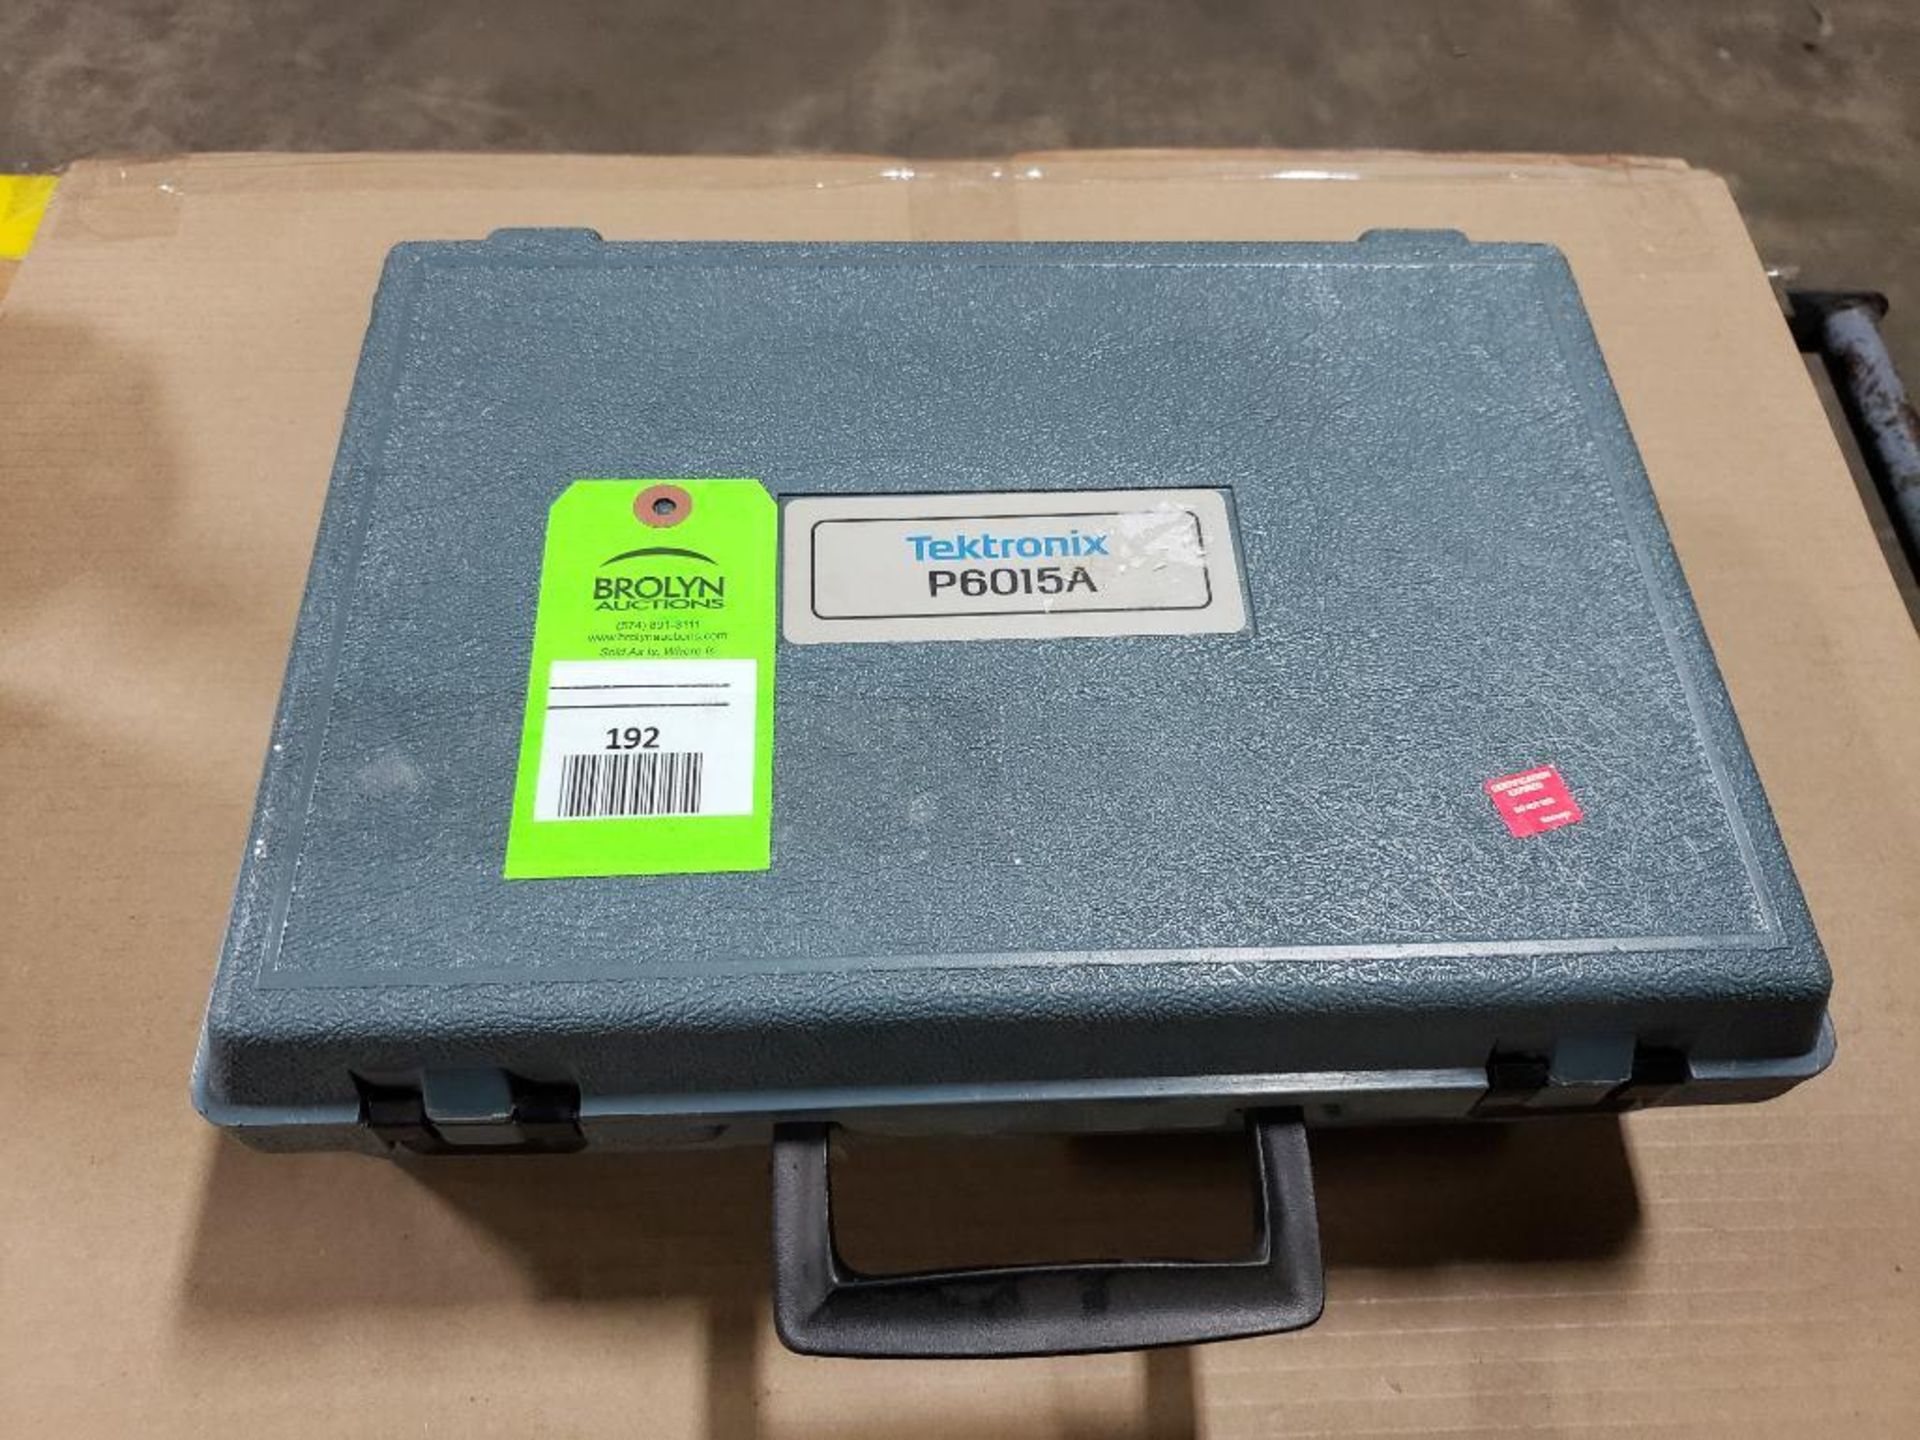 Tektronix P6015A Oscilloscope Probe kit.